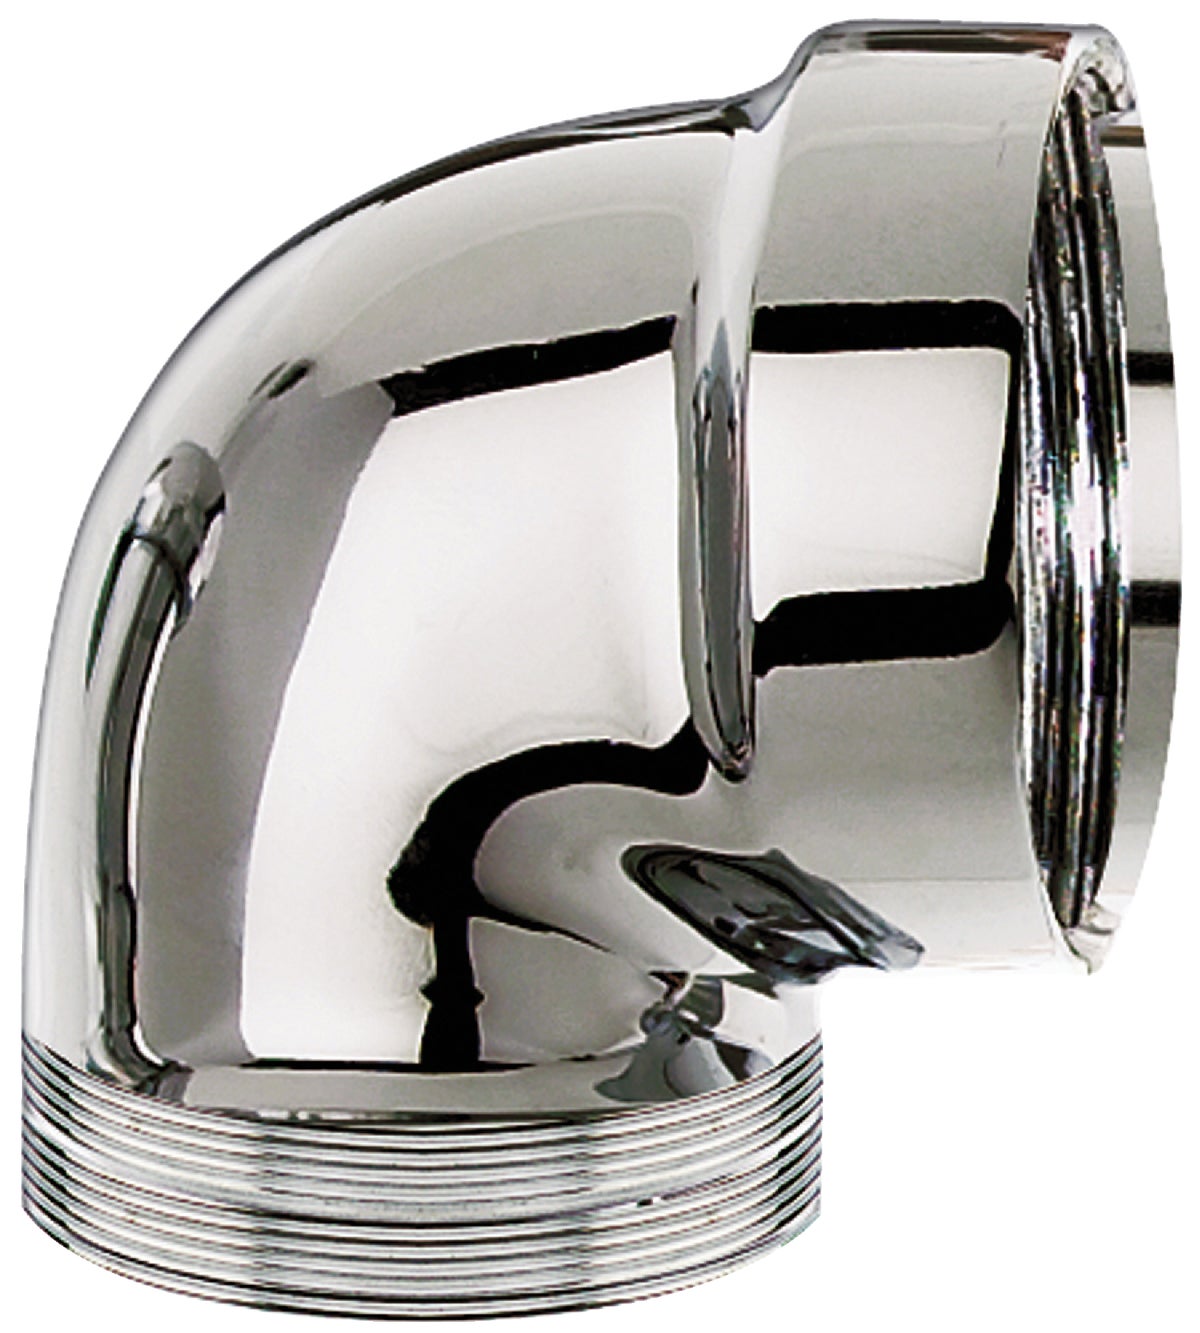 1-1/2"  Adjustable sink P-trap 20 Gauge Chrome plated brass  Brand New #503-20-3 